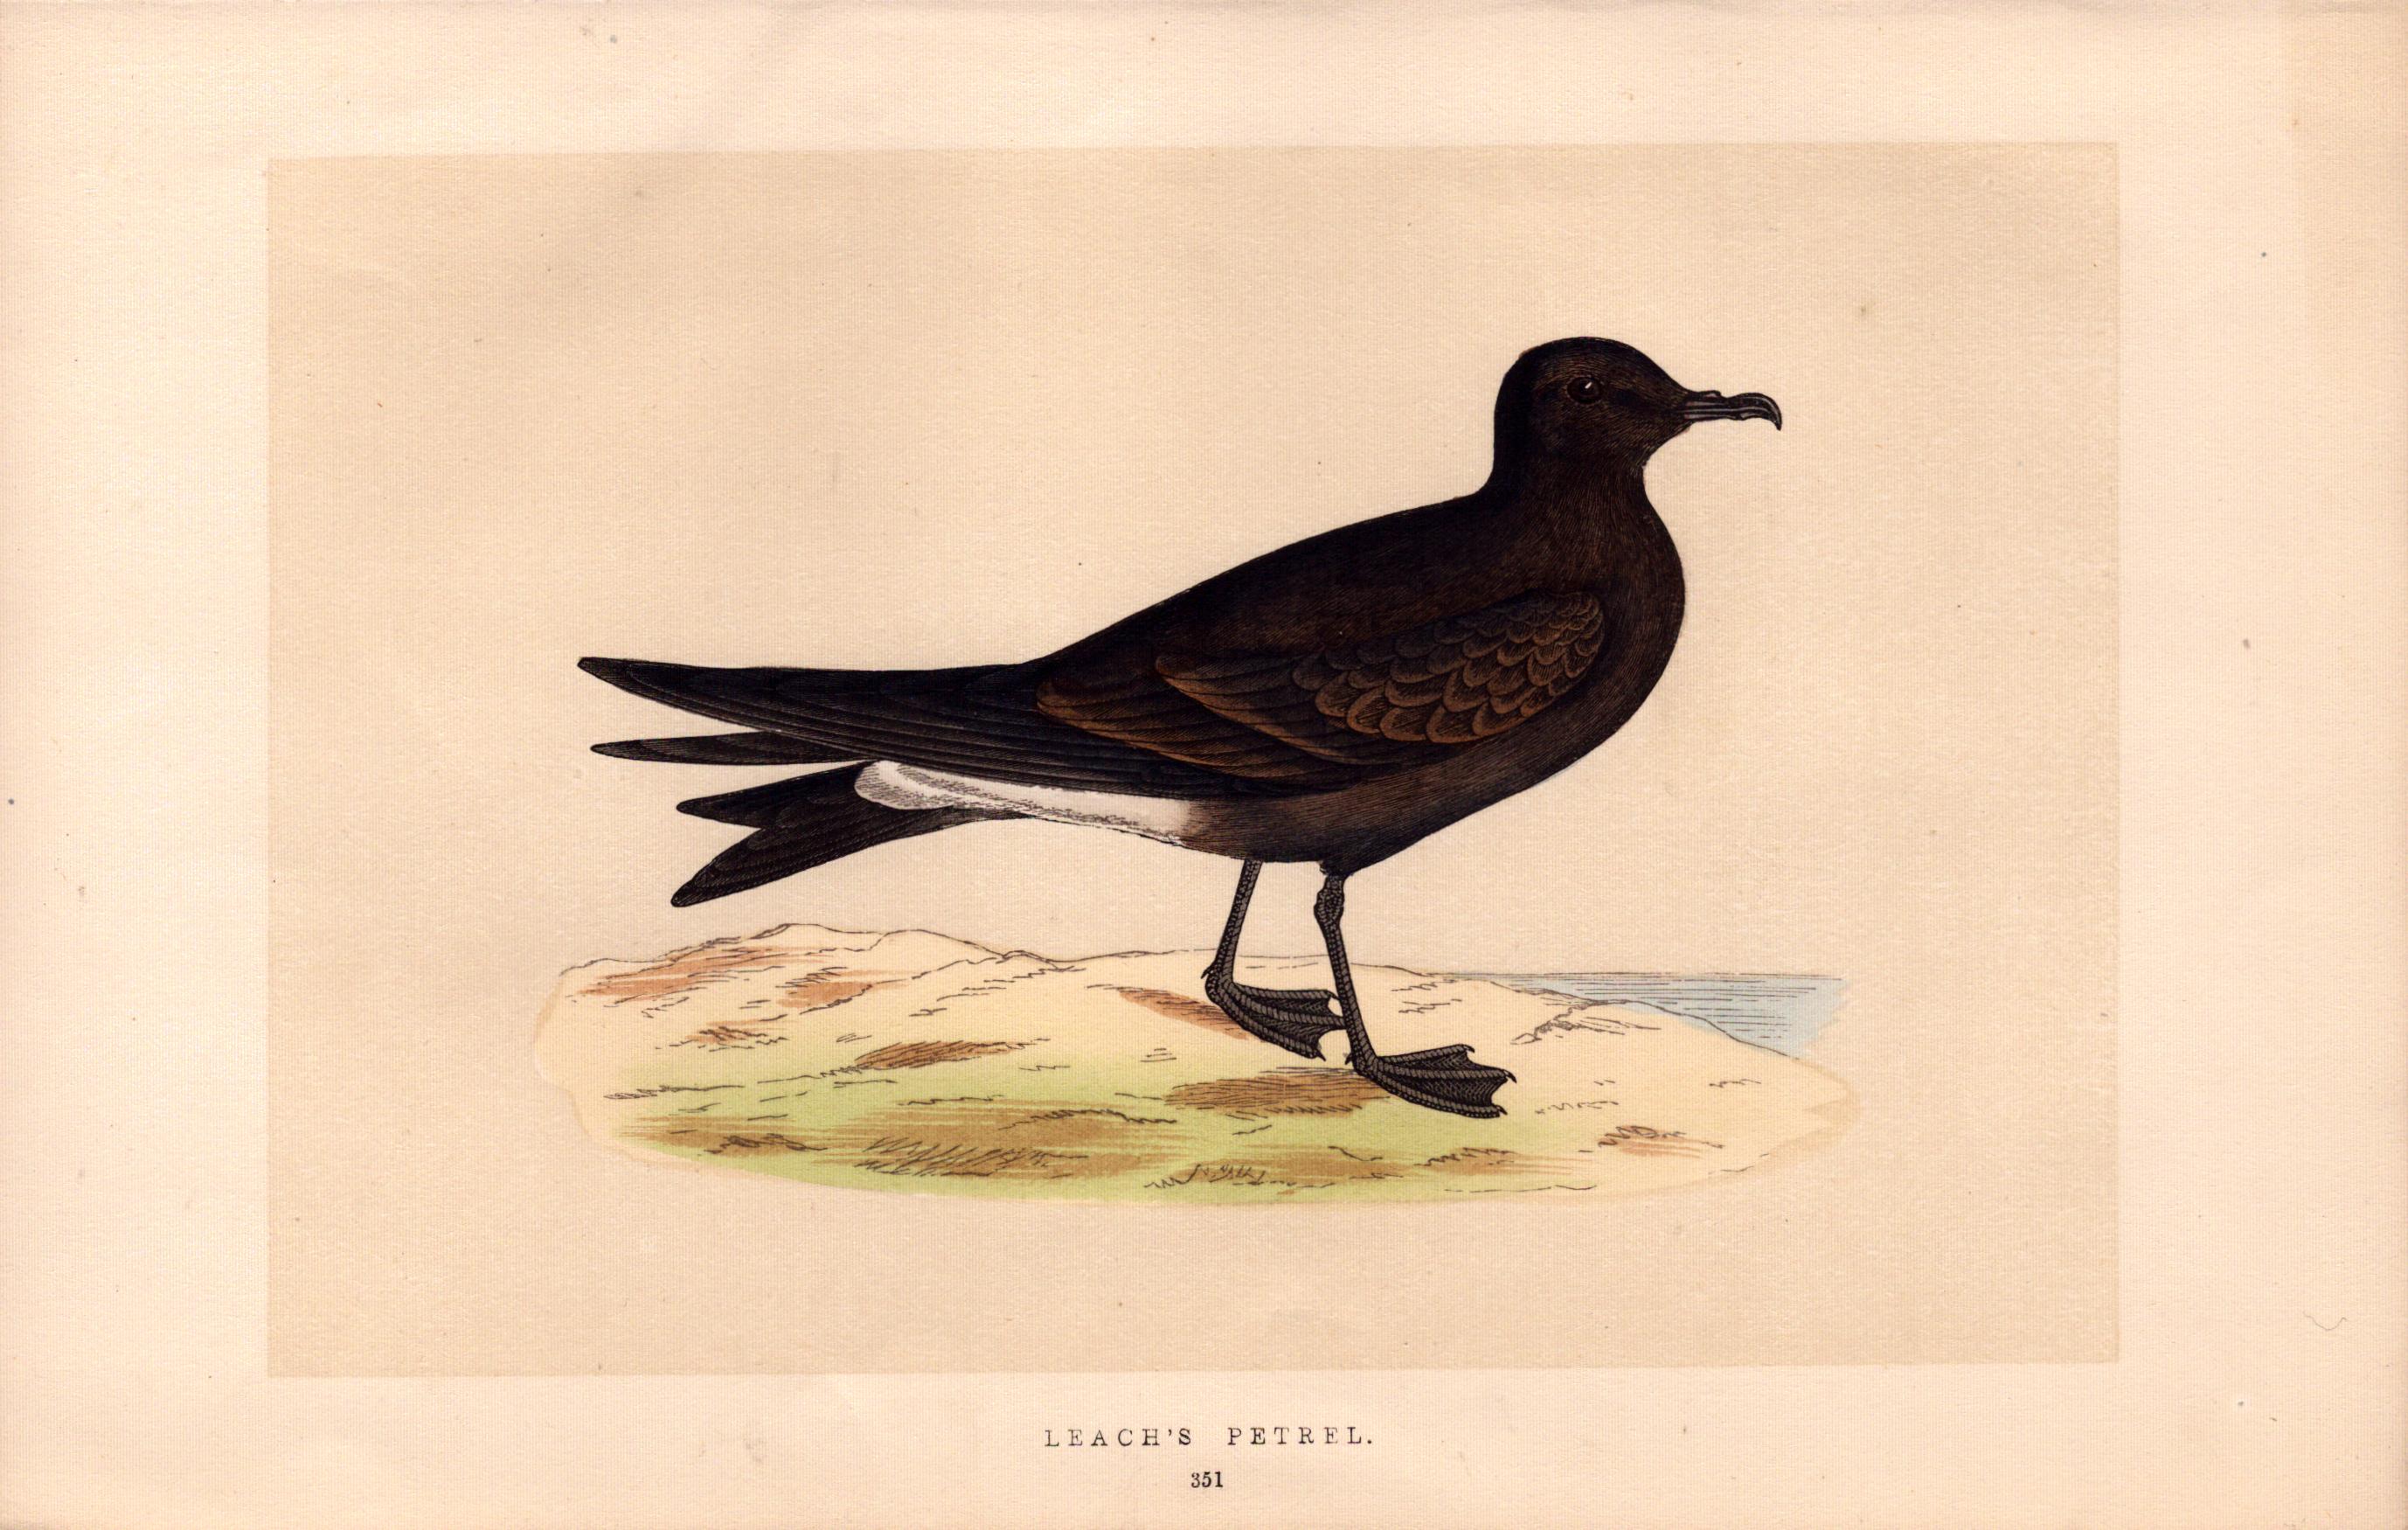 Leach’s Petrel Rev Morris 1857 Antique History of British Birds Engraving.